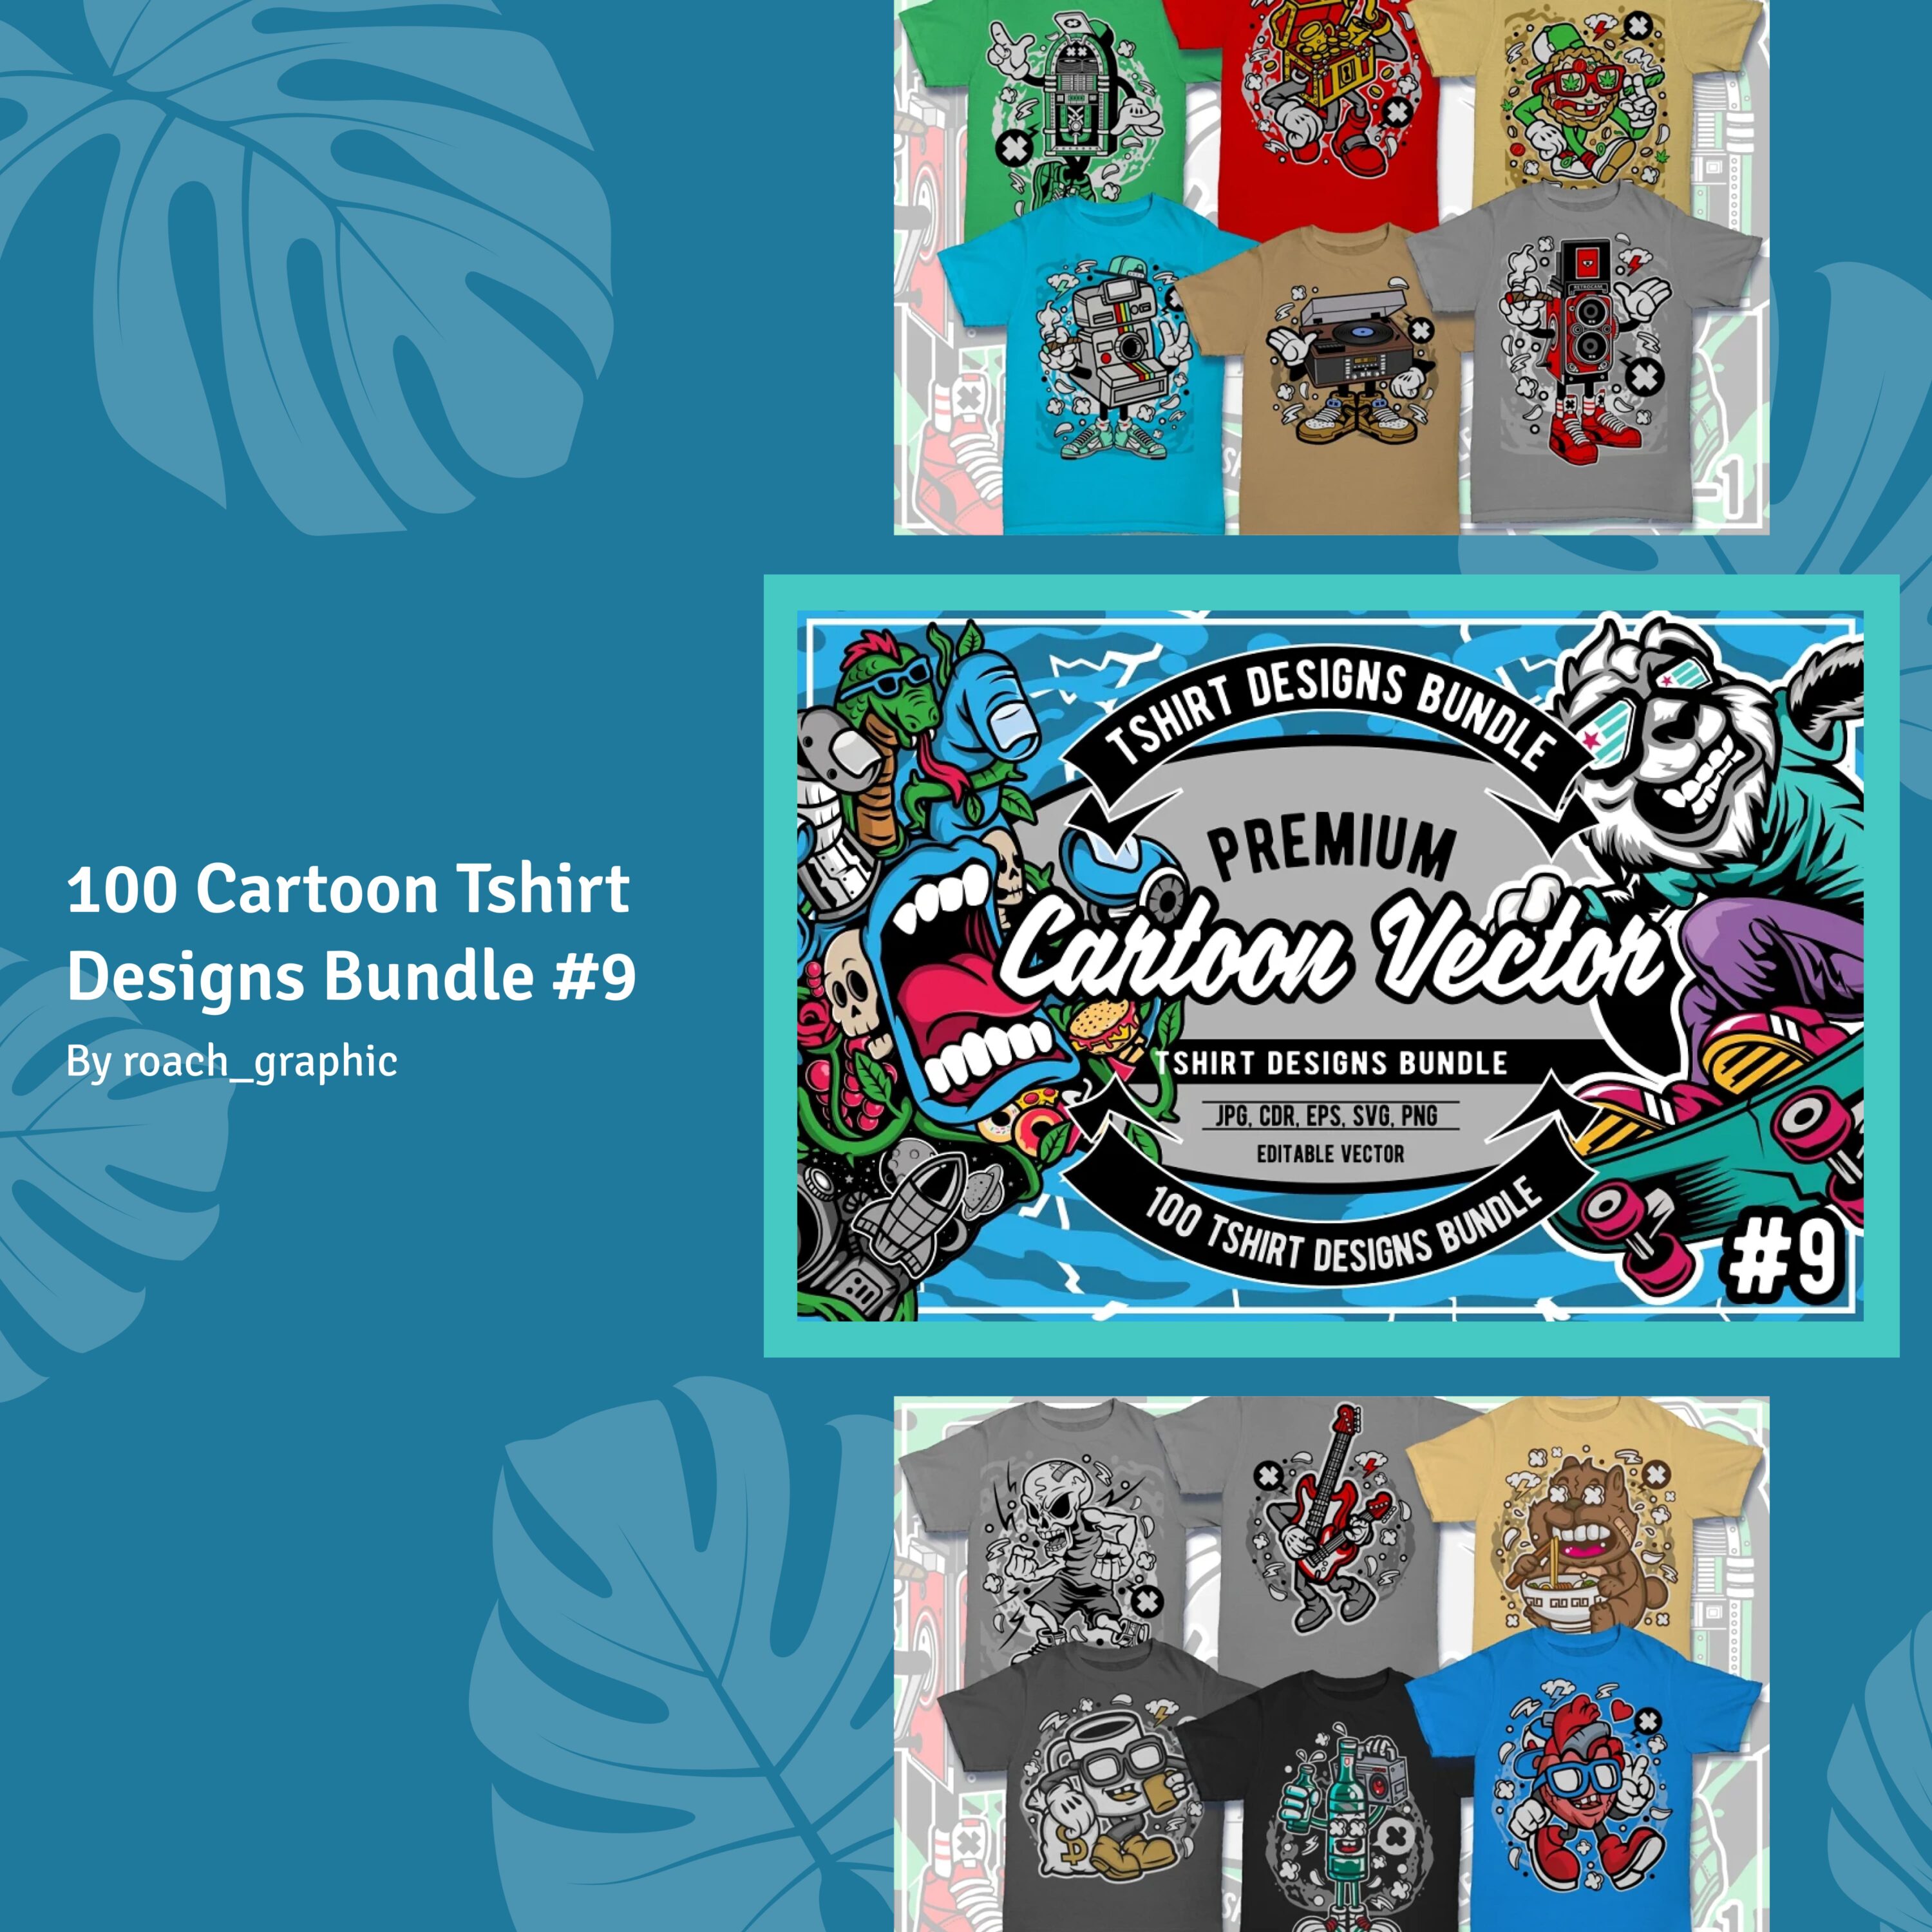 100 cartoon tshirt designs bundle 9.